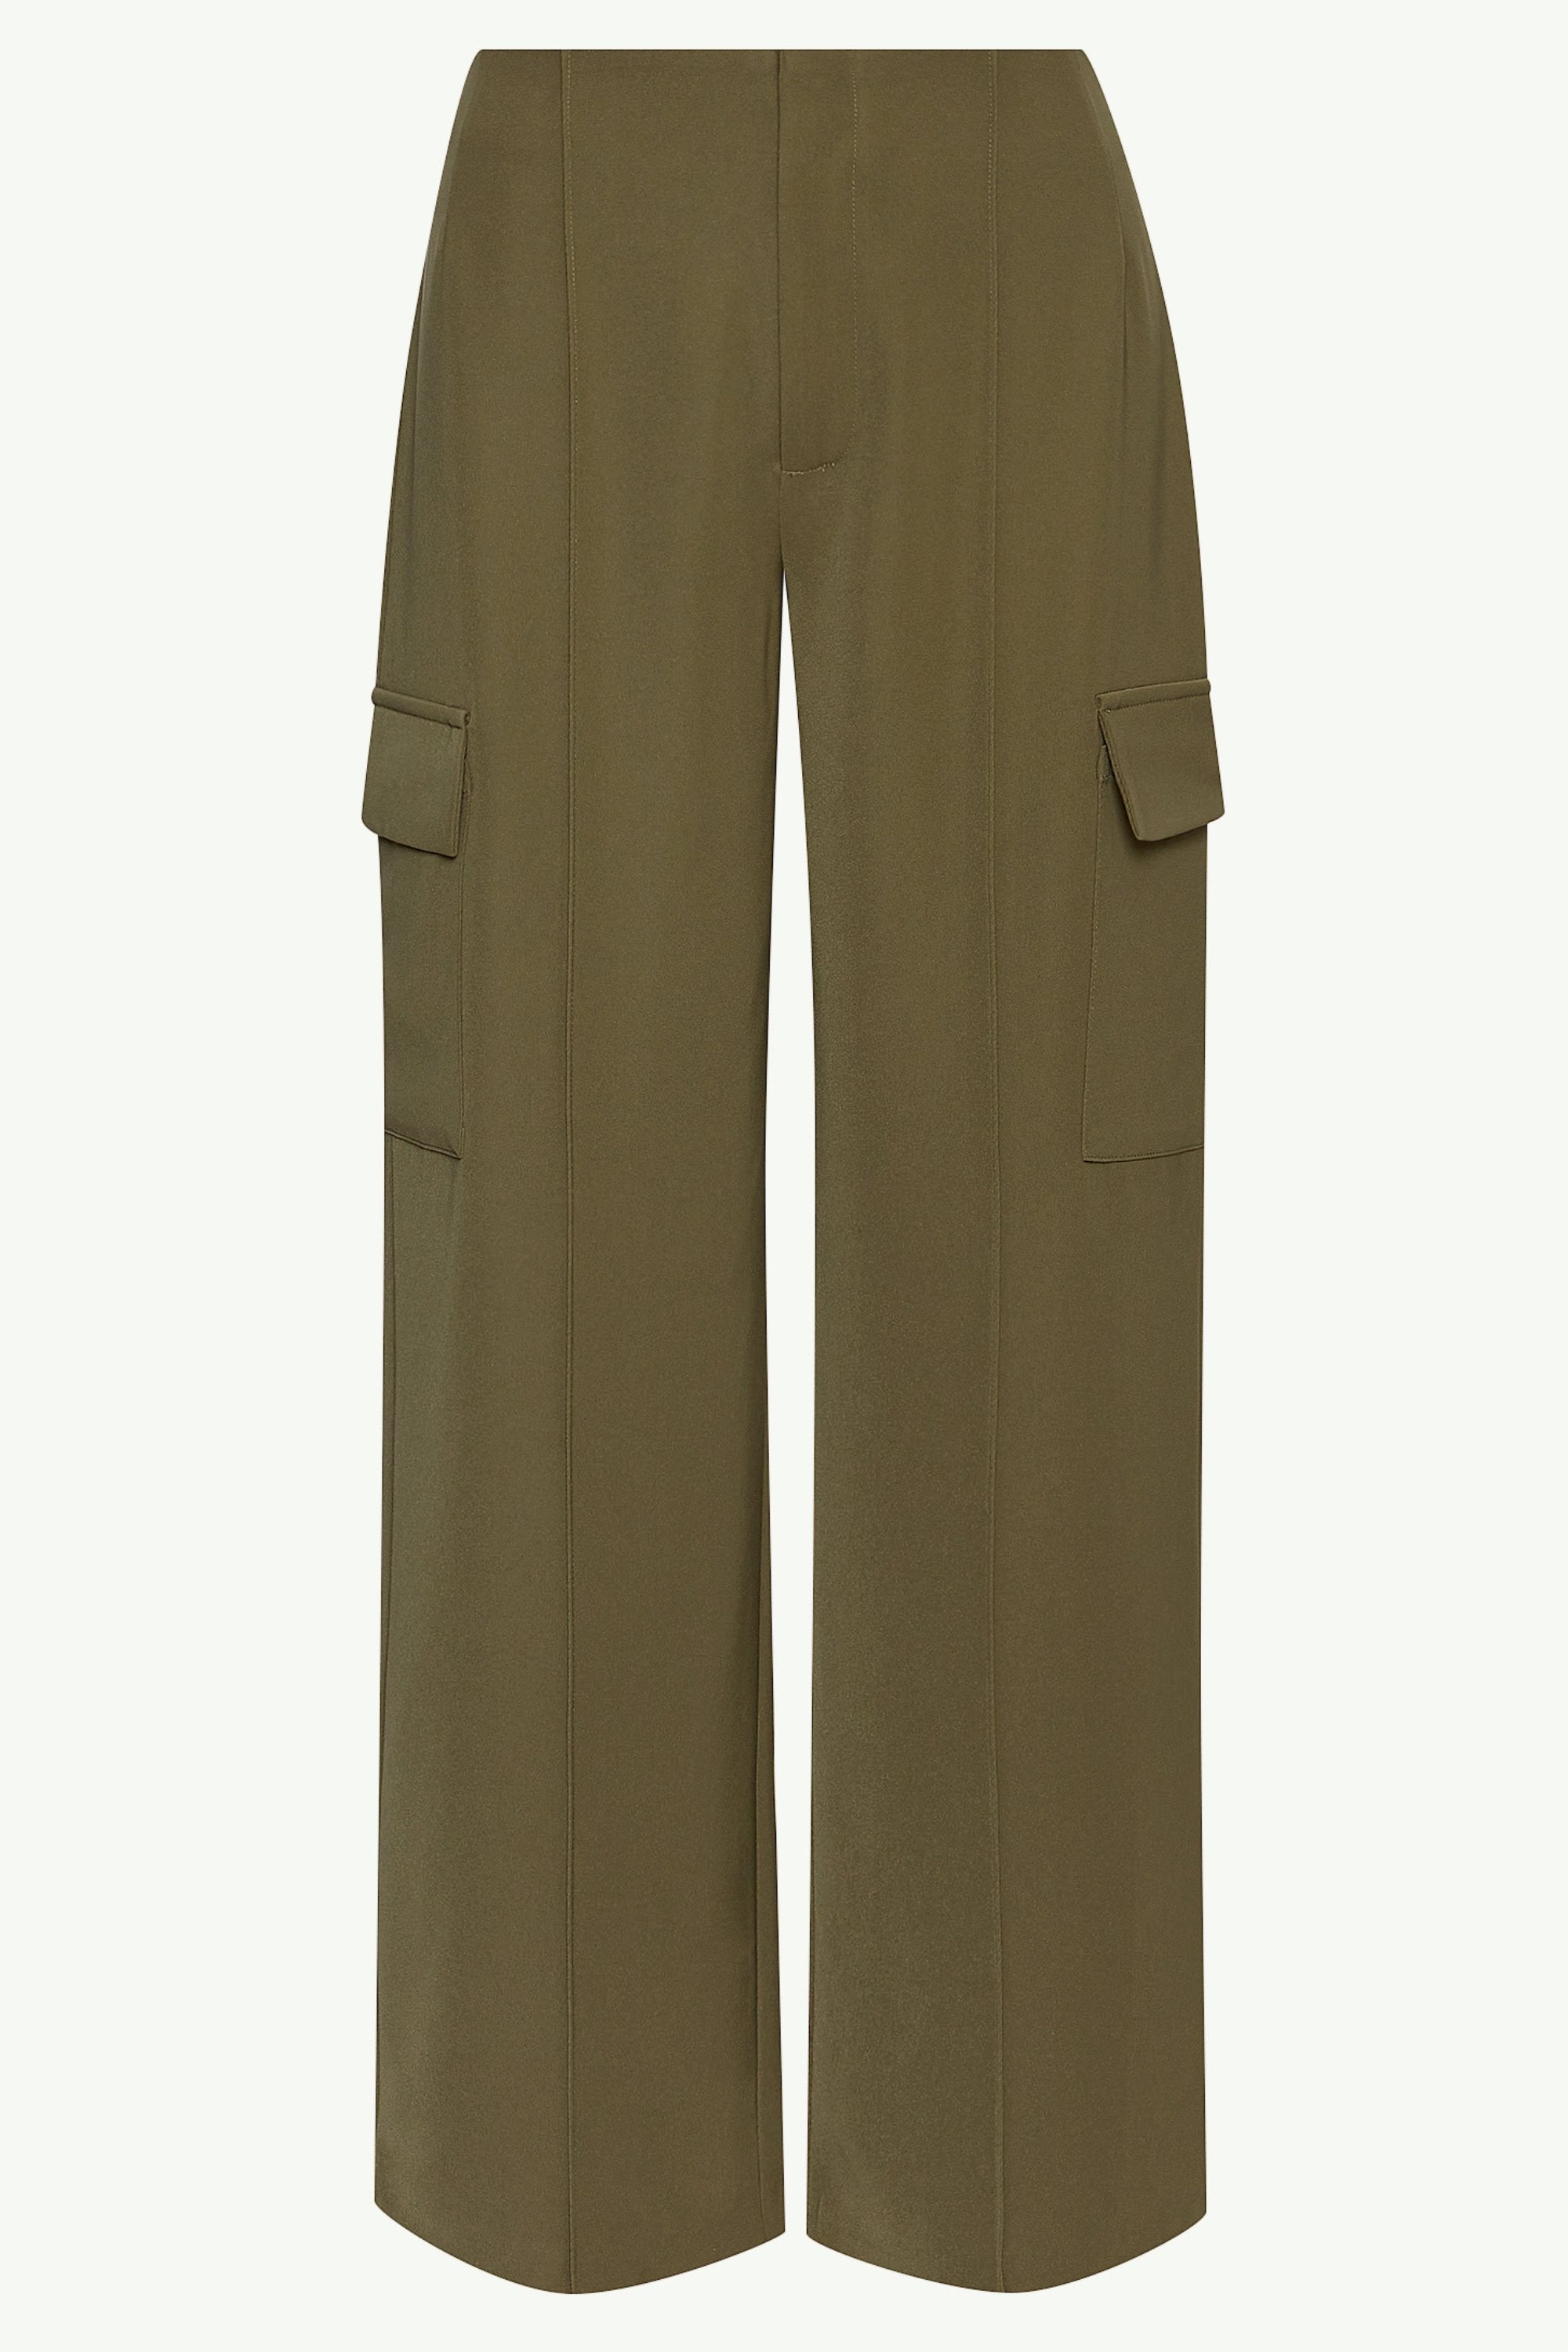 Rumer Wide Leg Cargo Pants - Olive Clothing Veiled 